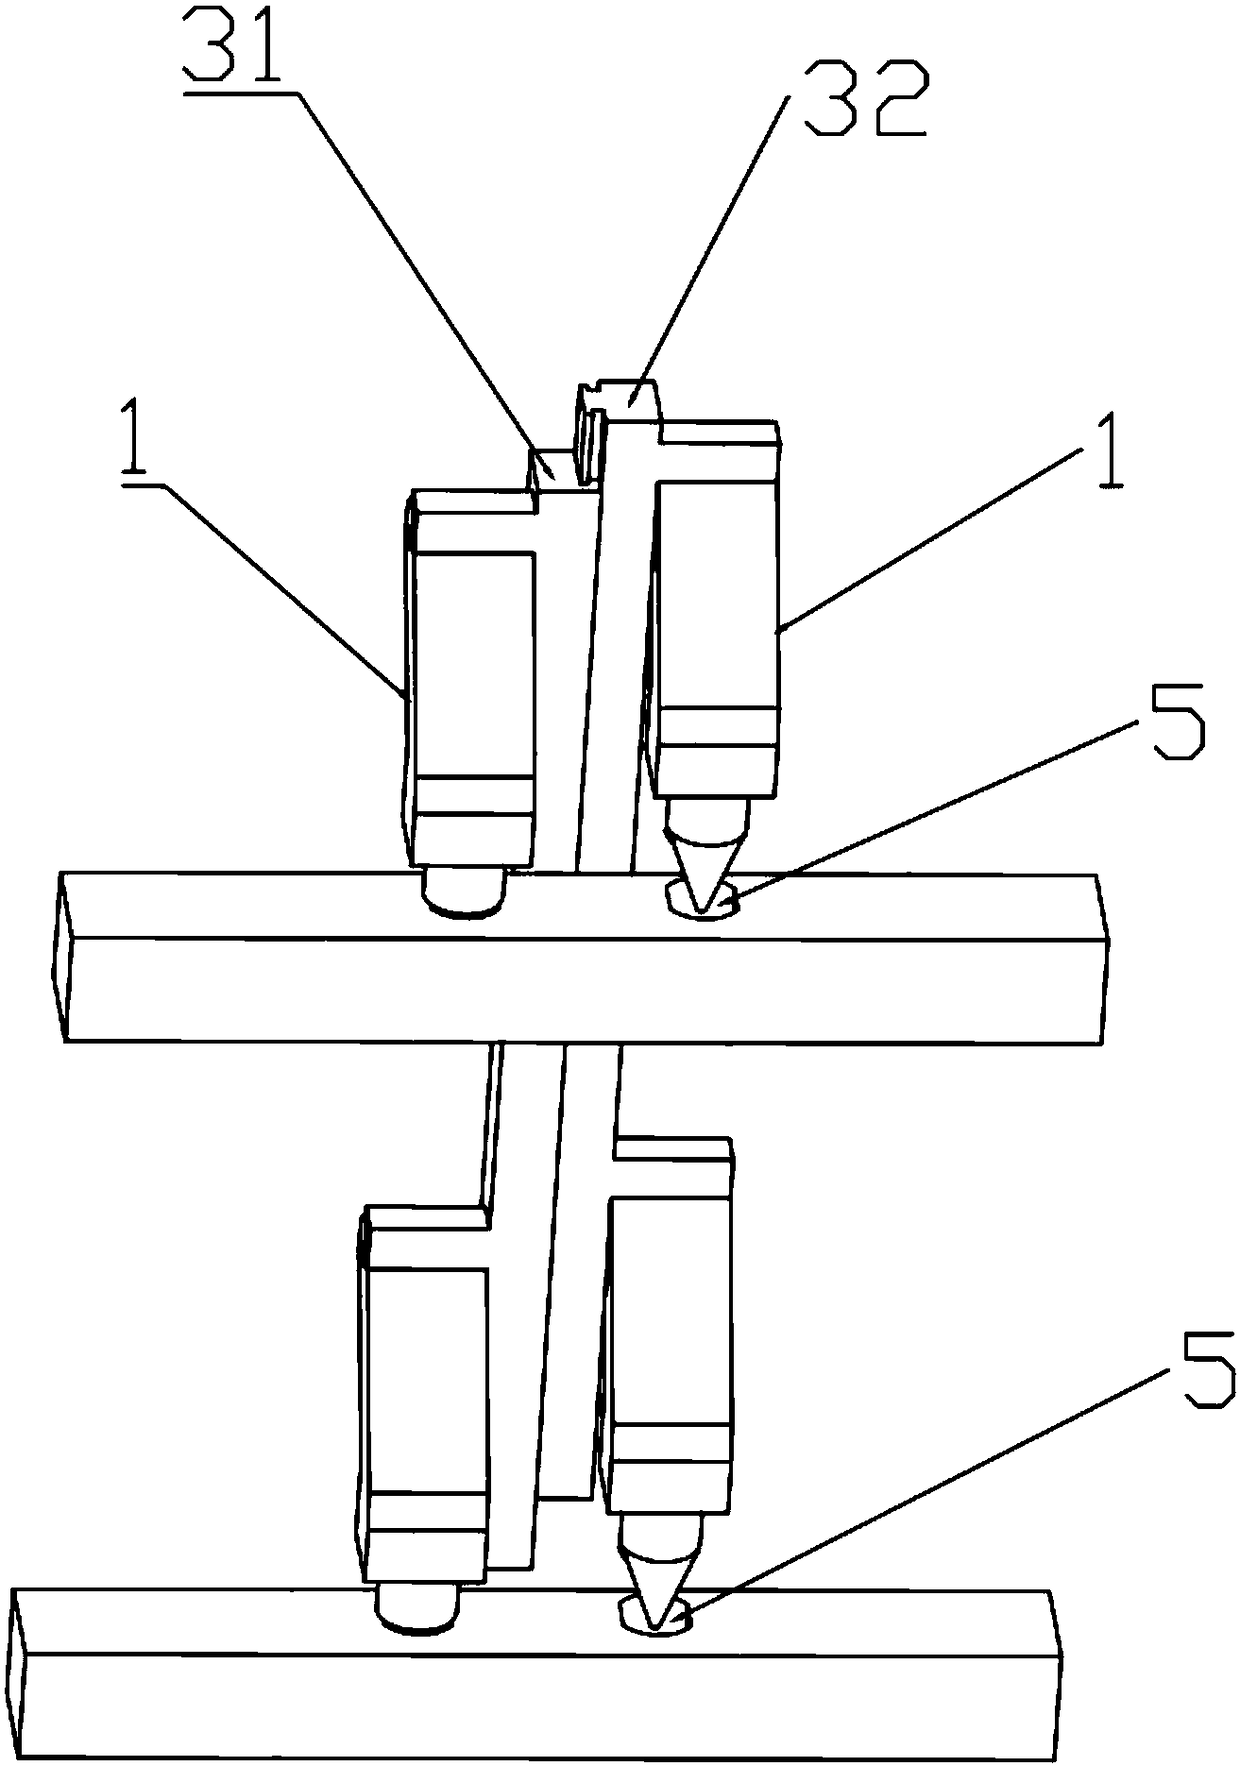 Mechanical arm mechanical lock and climbing device using mechanical arm mechanical lock